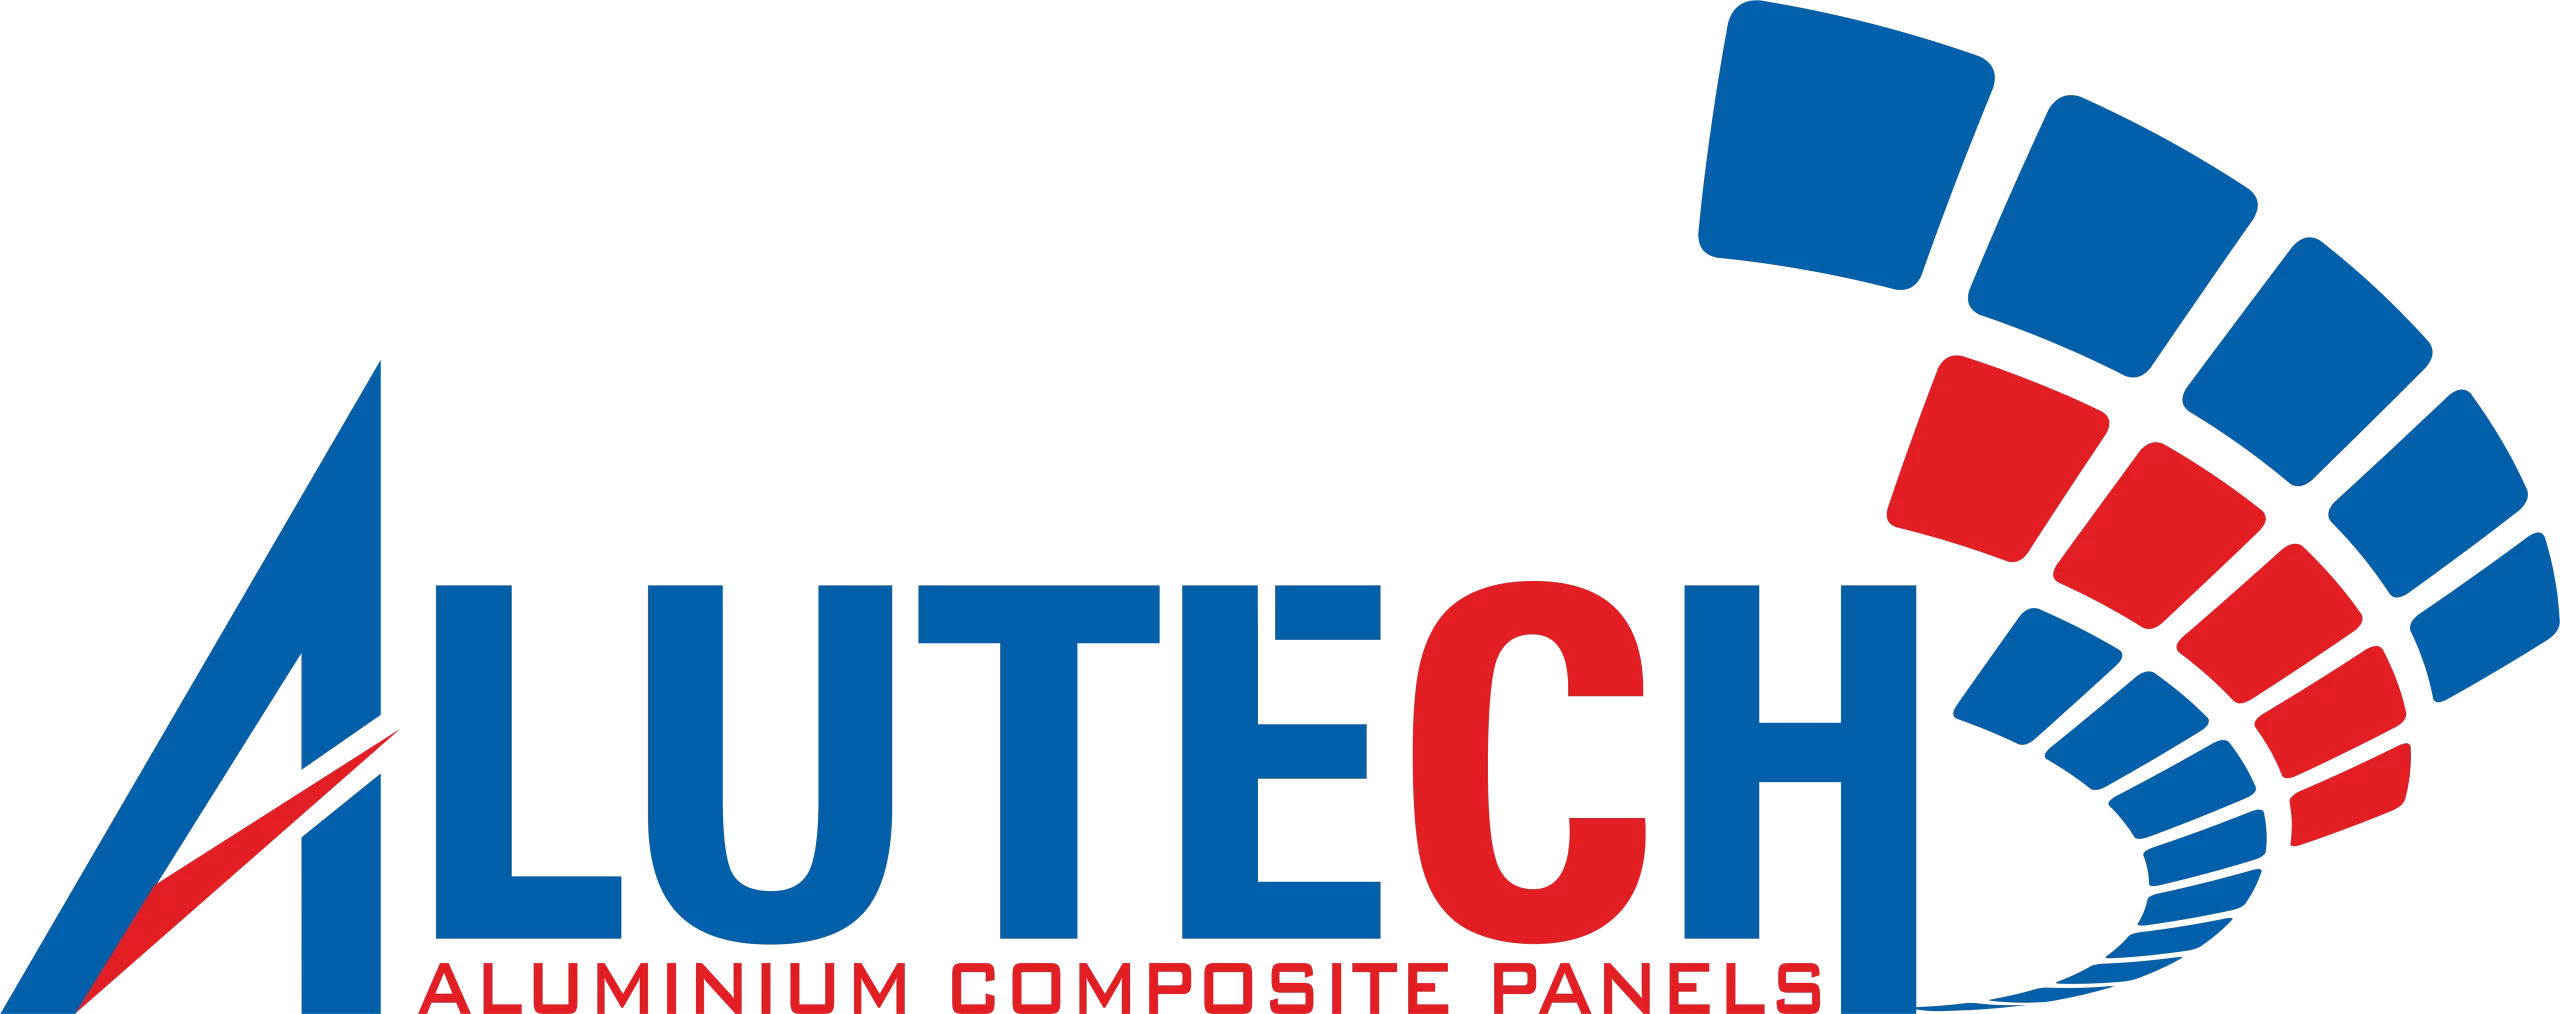  Aluminium Windows - Alutech Panels Logo